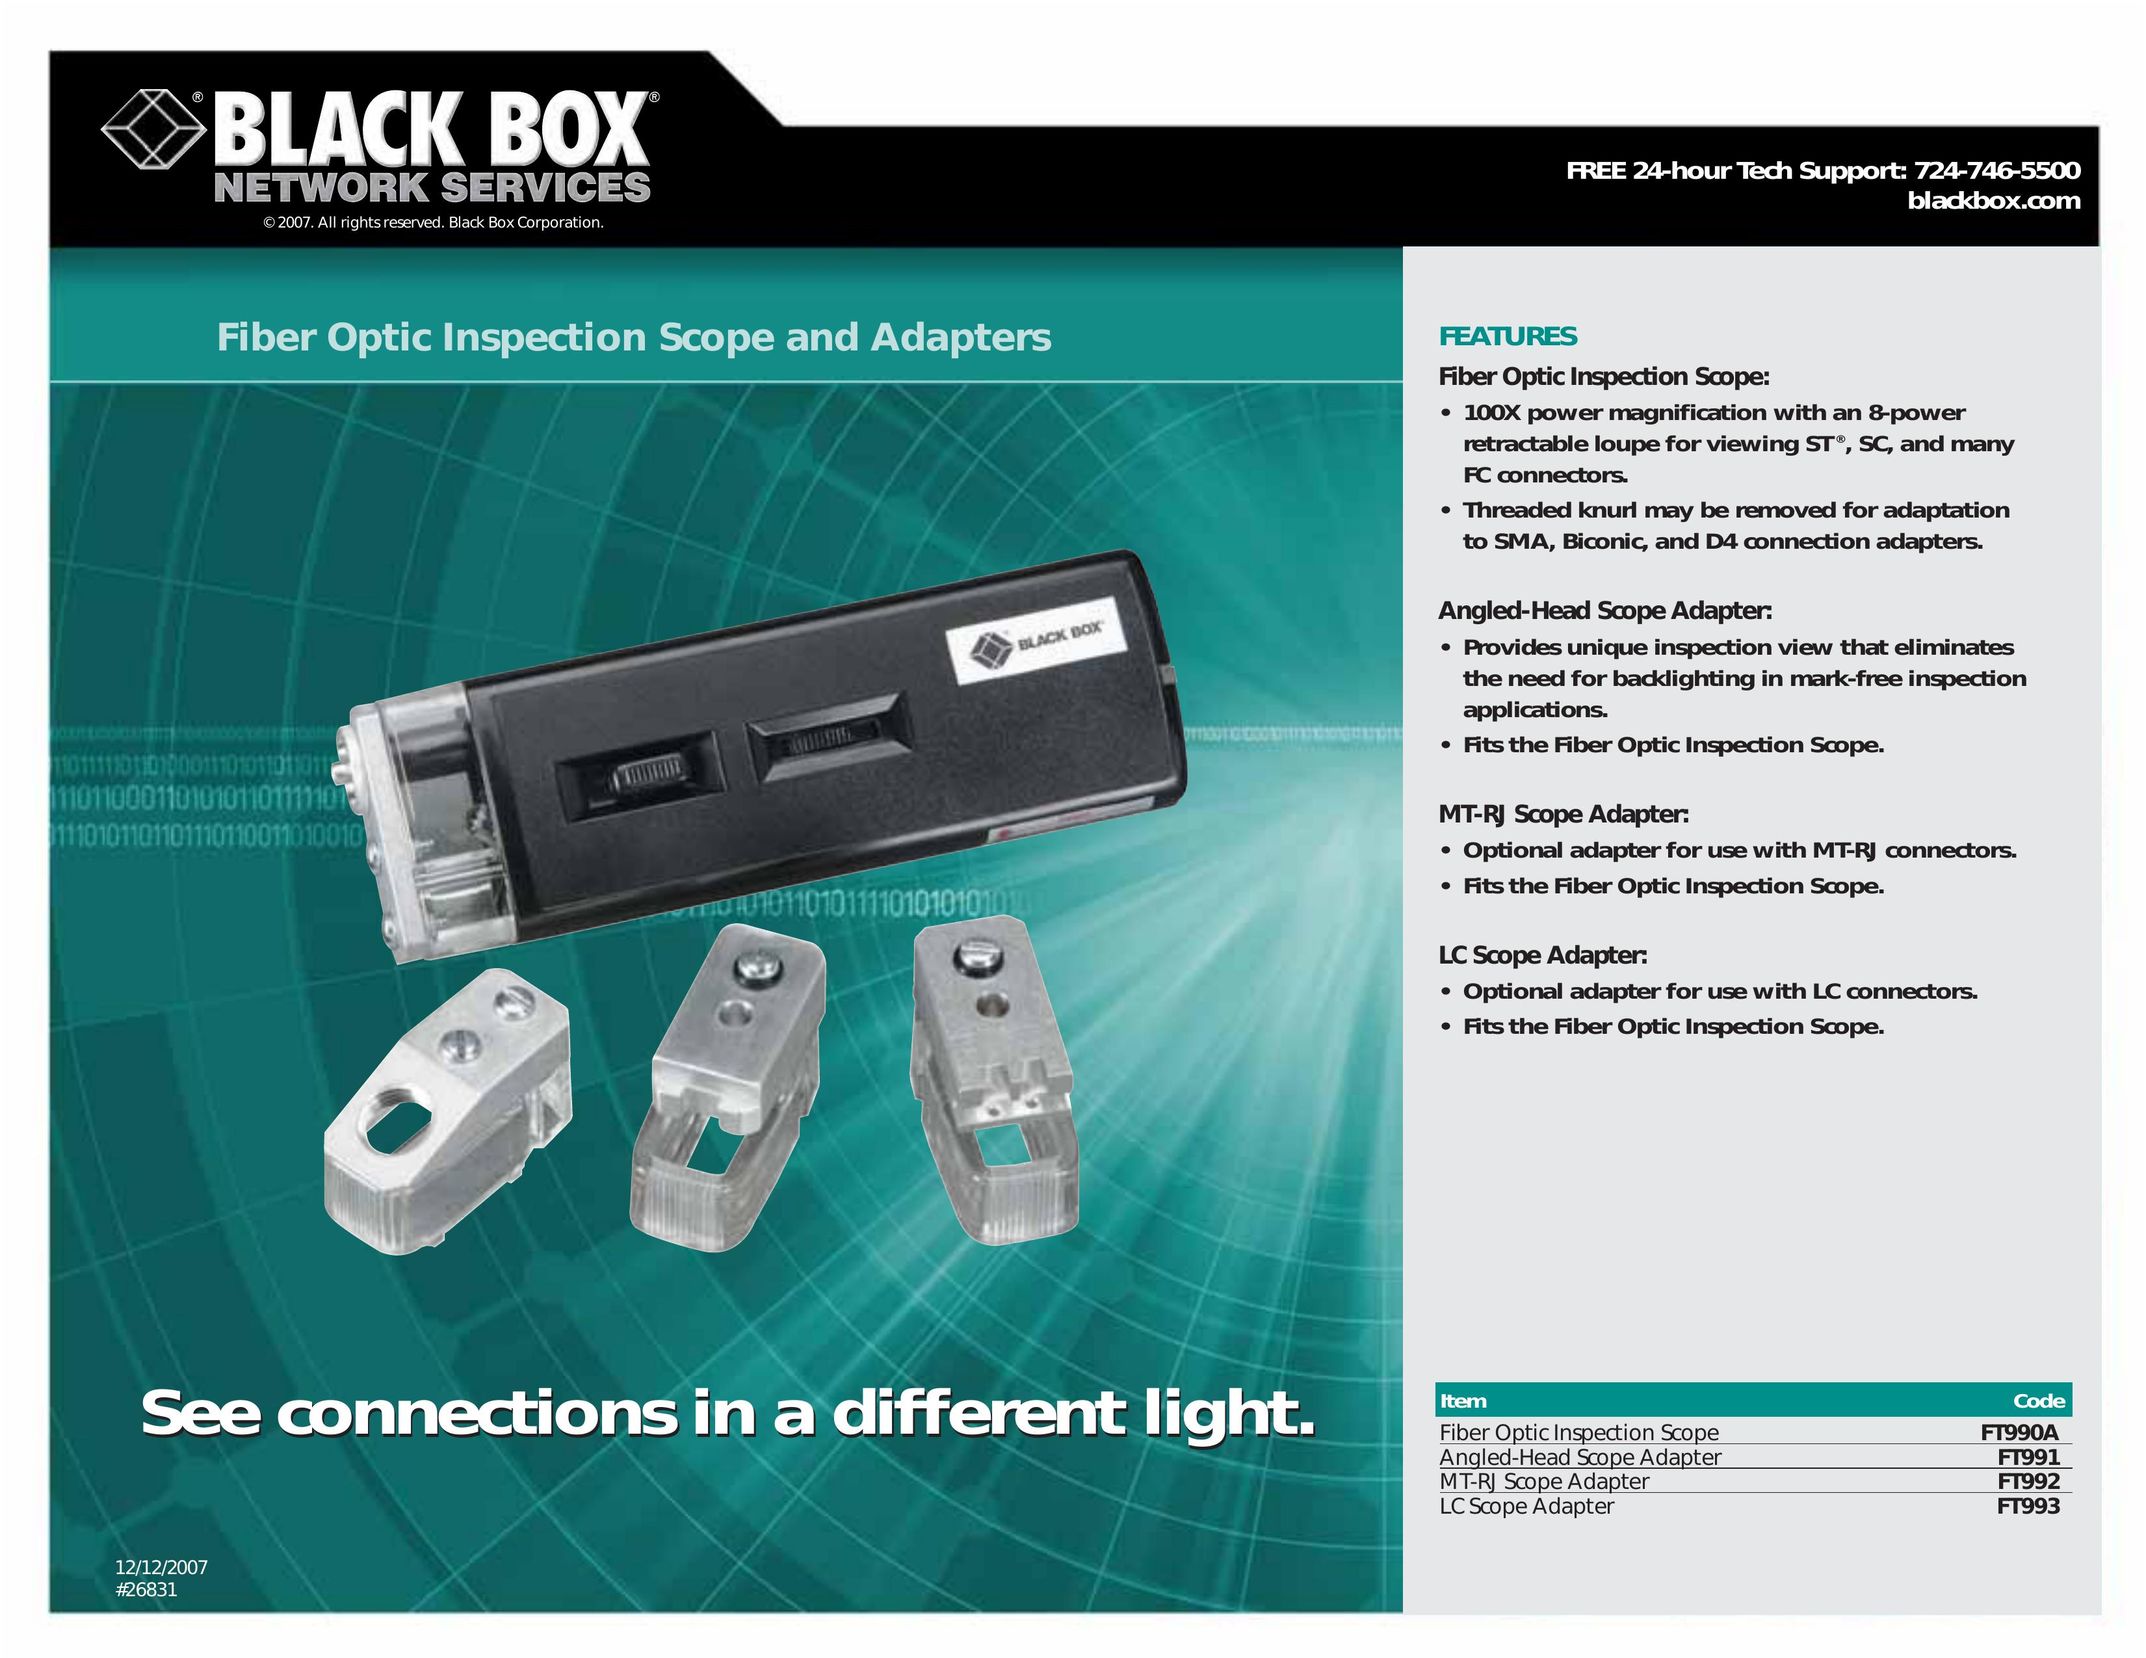 Black Box FT993 Network Card User Manual